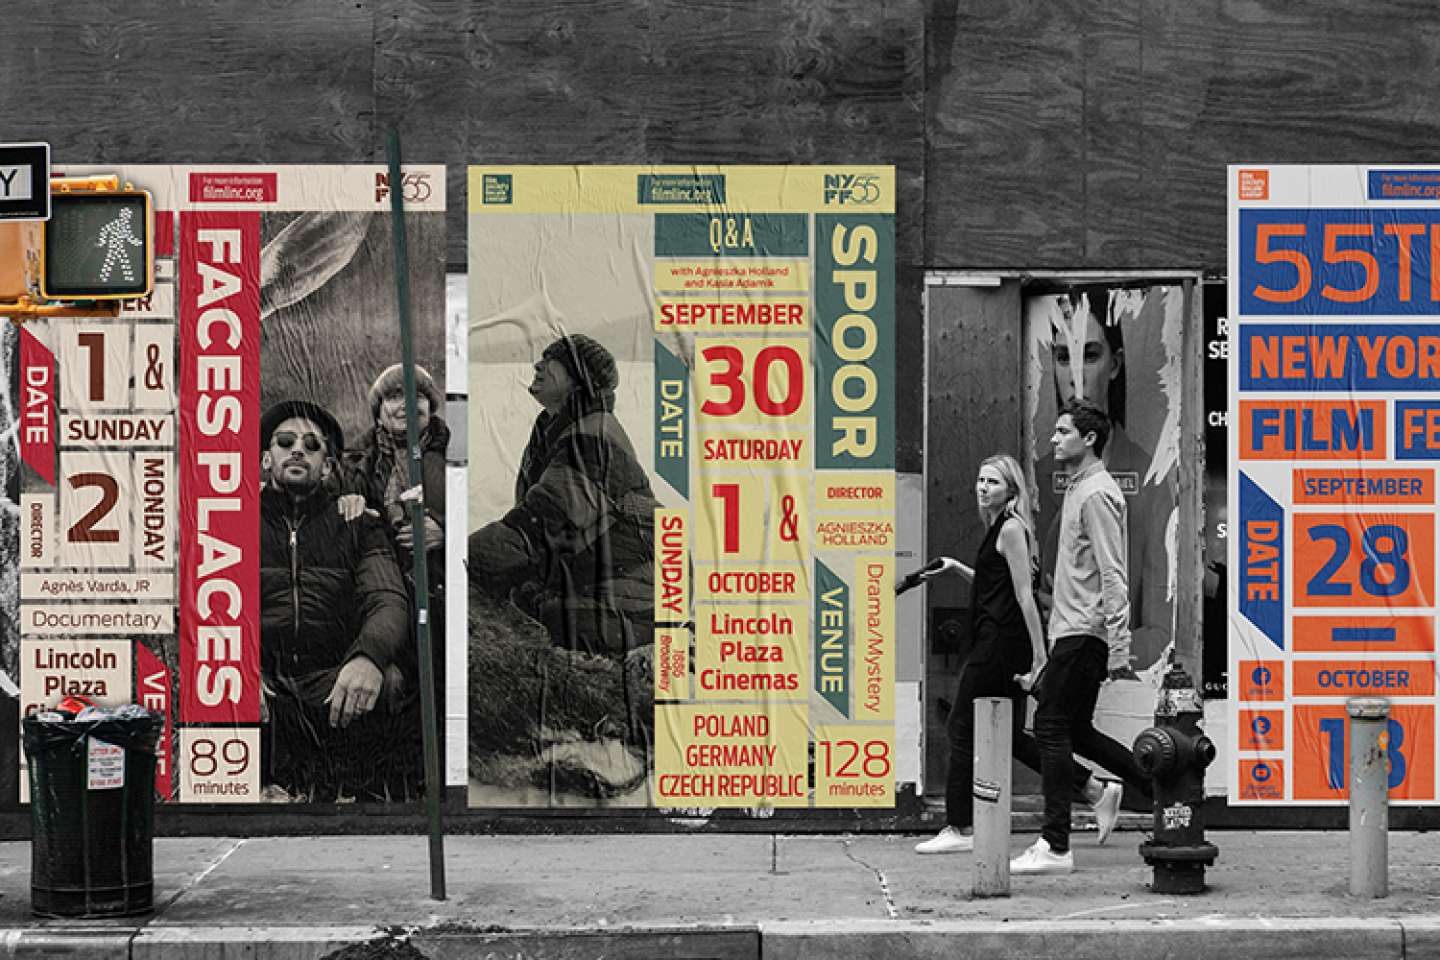 NYFF Poster Series